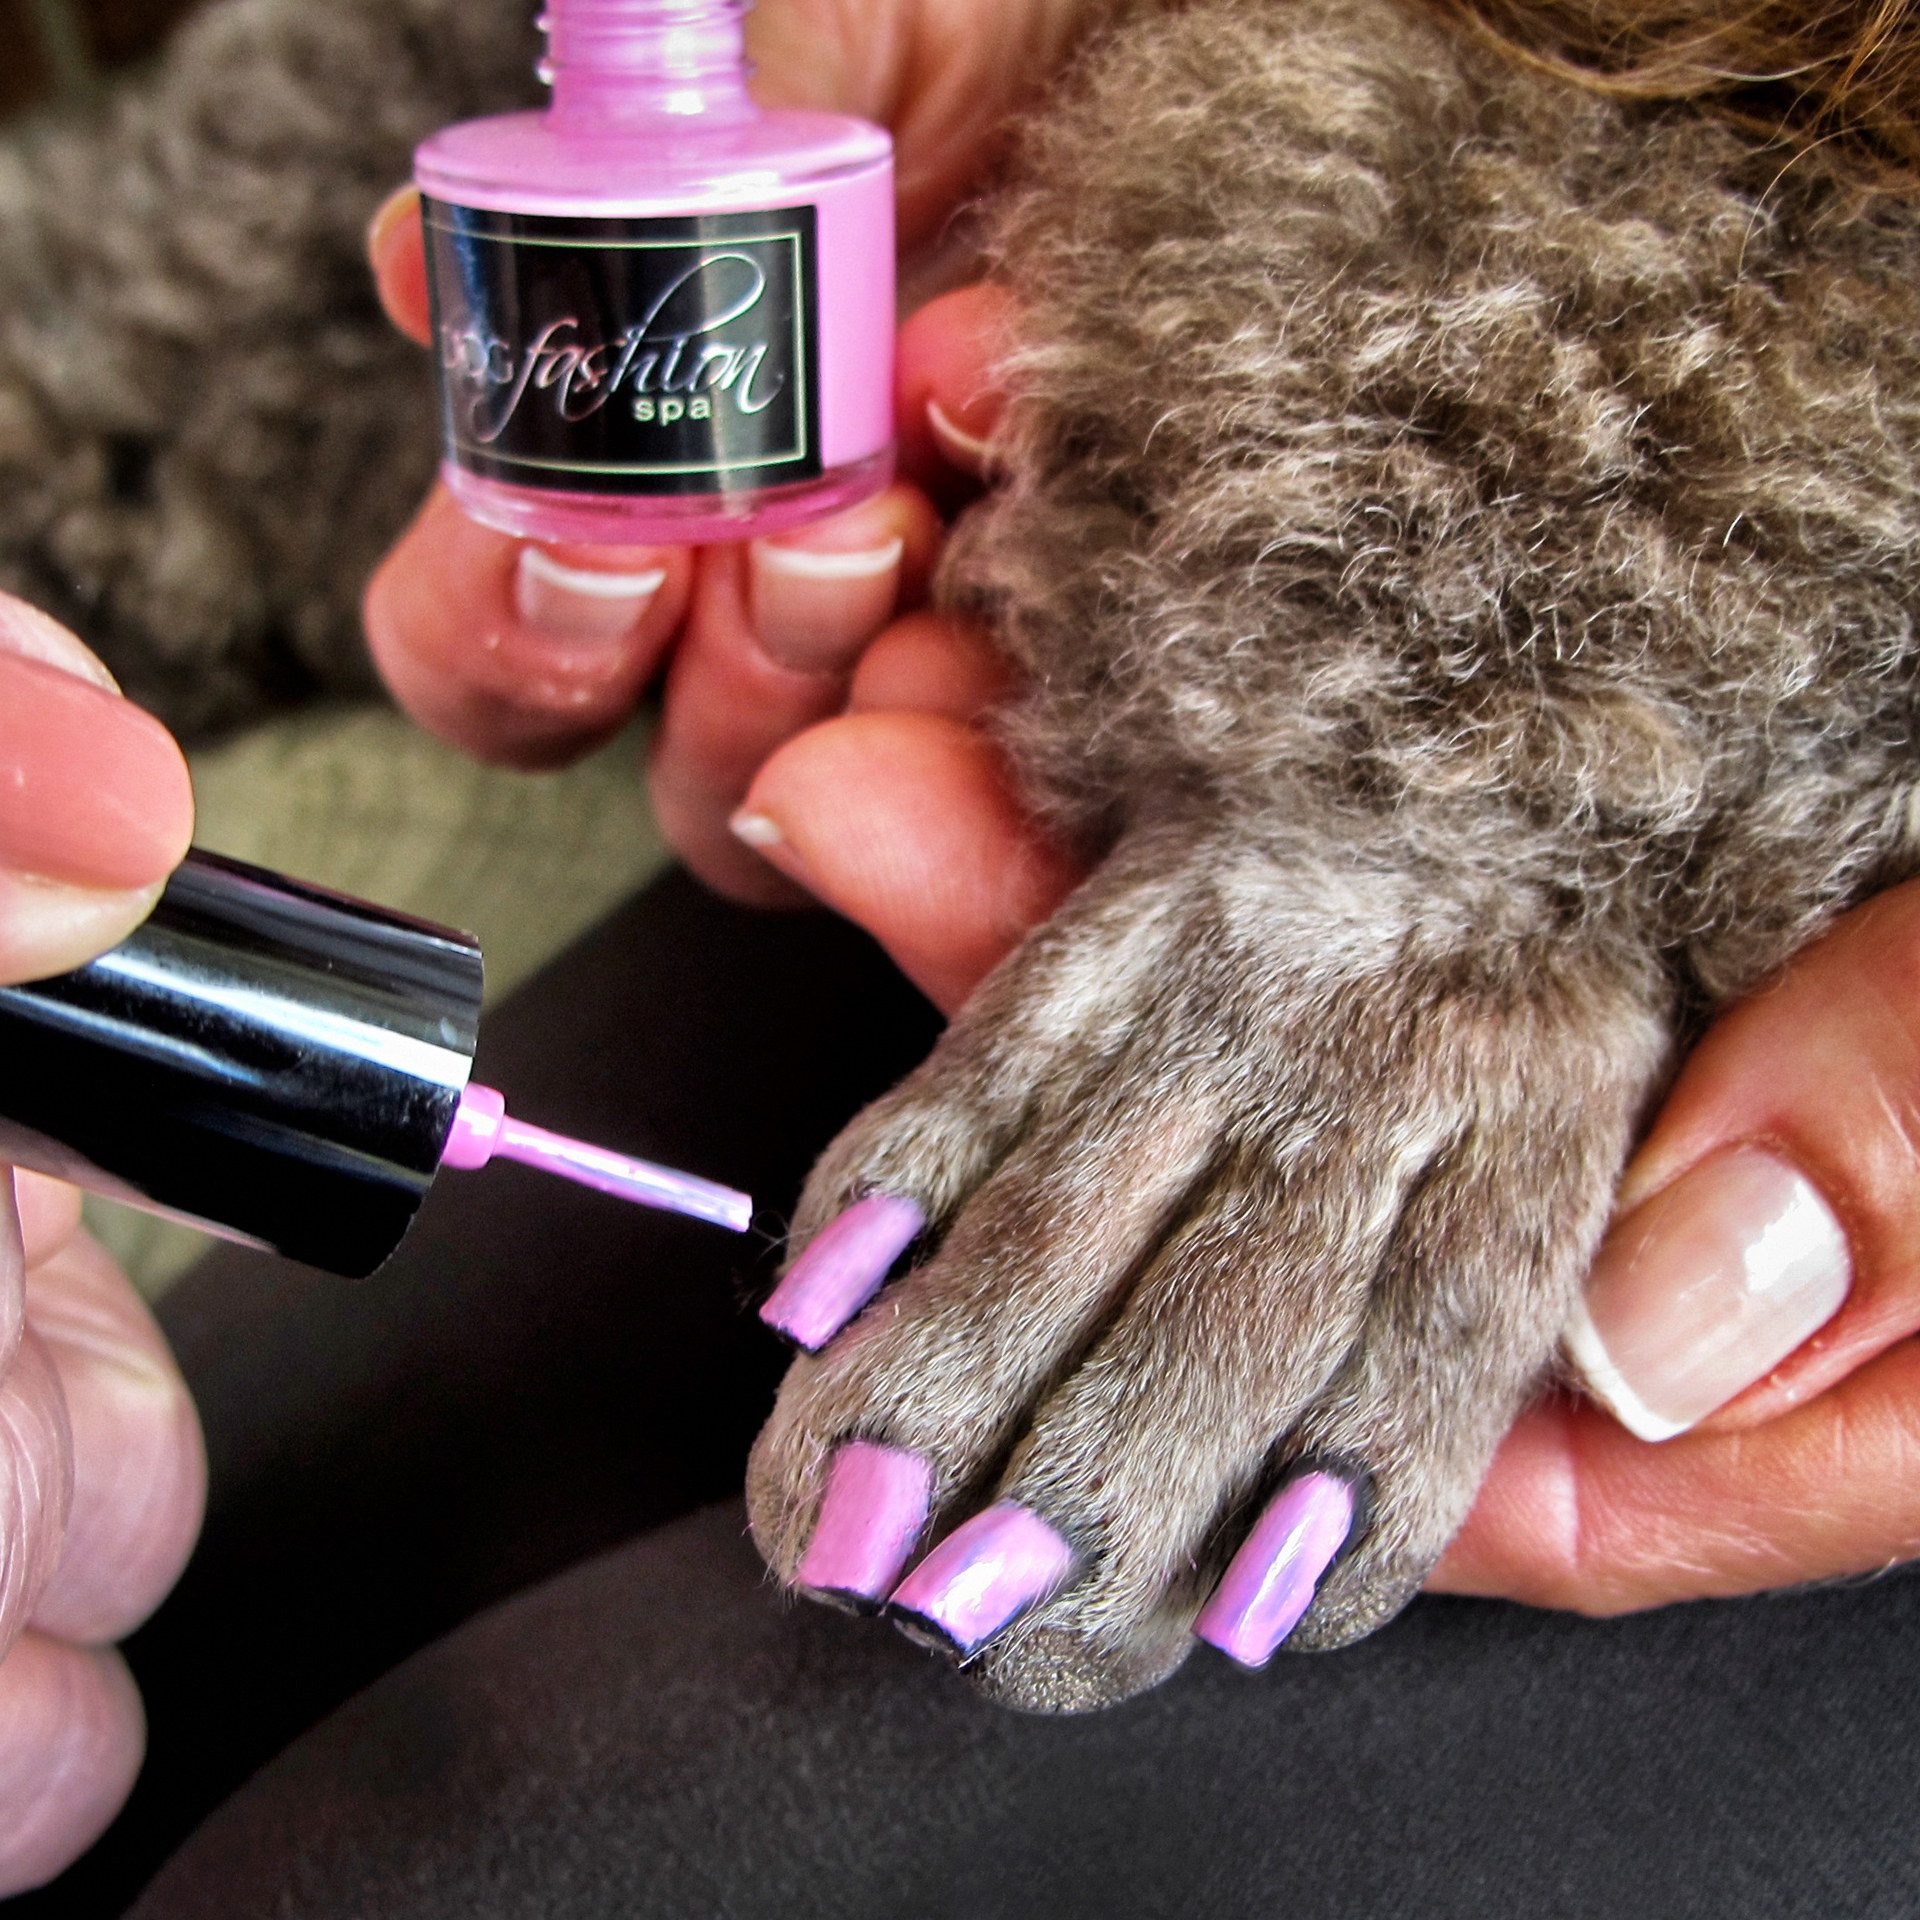 Dog Fashion Spa Nail polish in Cute Paw